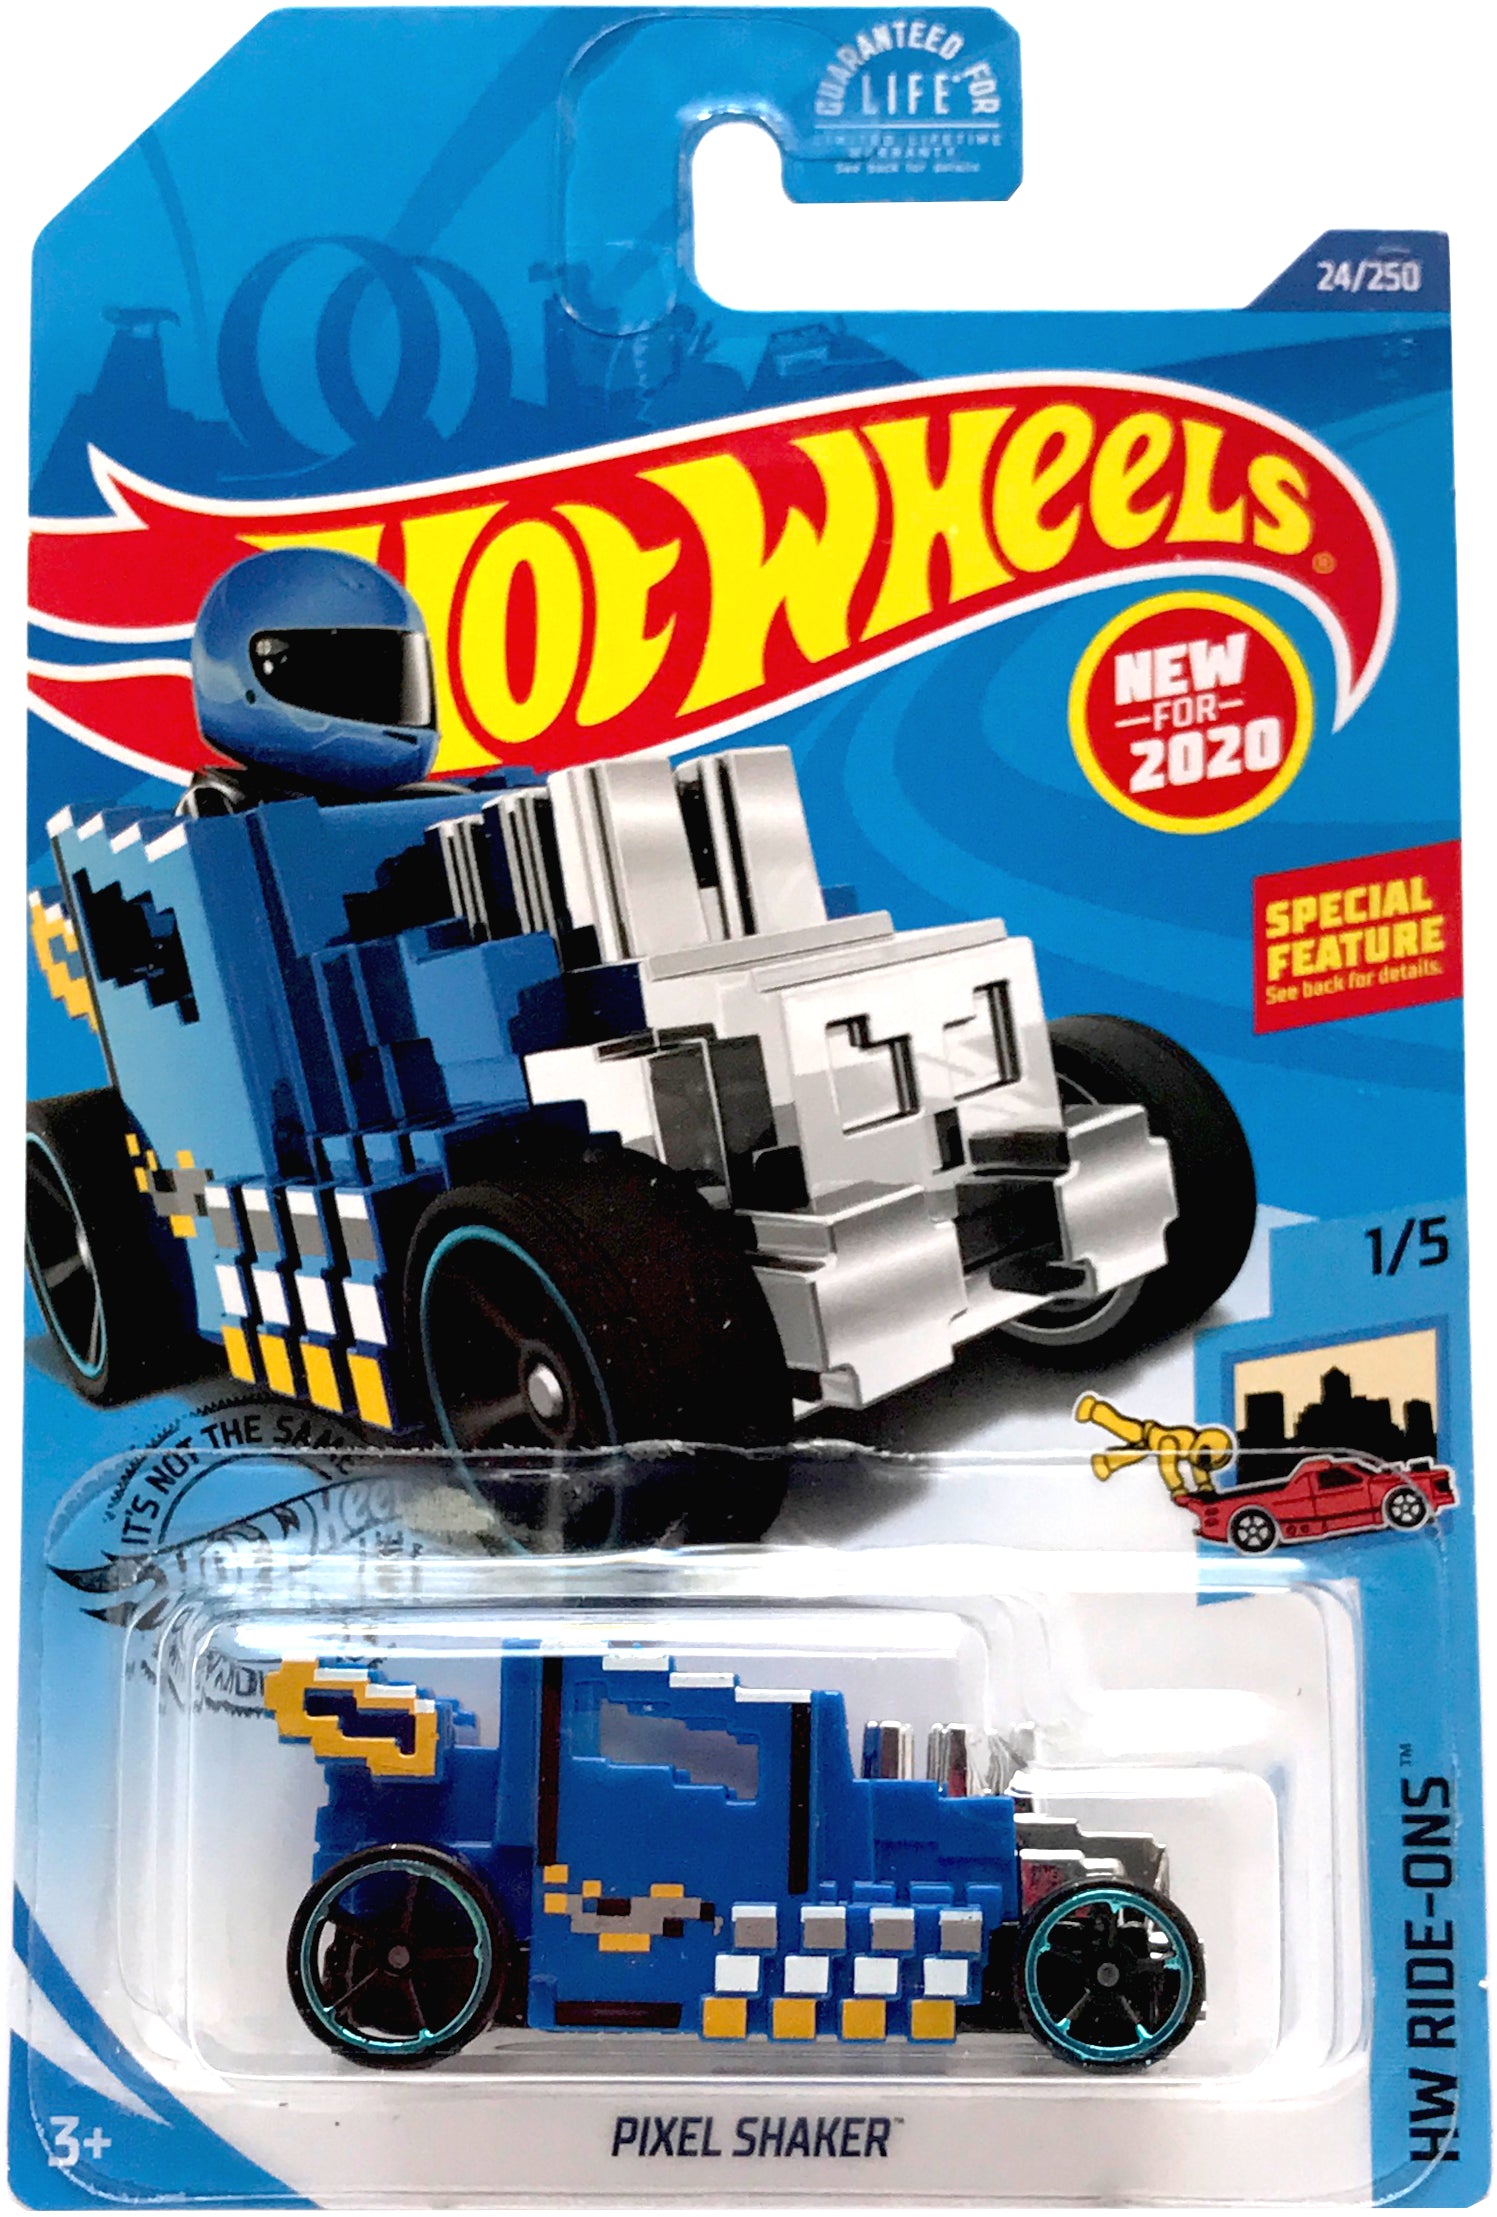 2020 Hot Wheels Mainline #024 - Pixel Shaker (Blue) GHF10